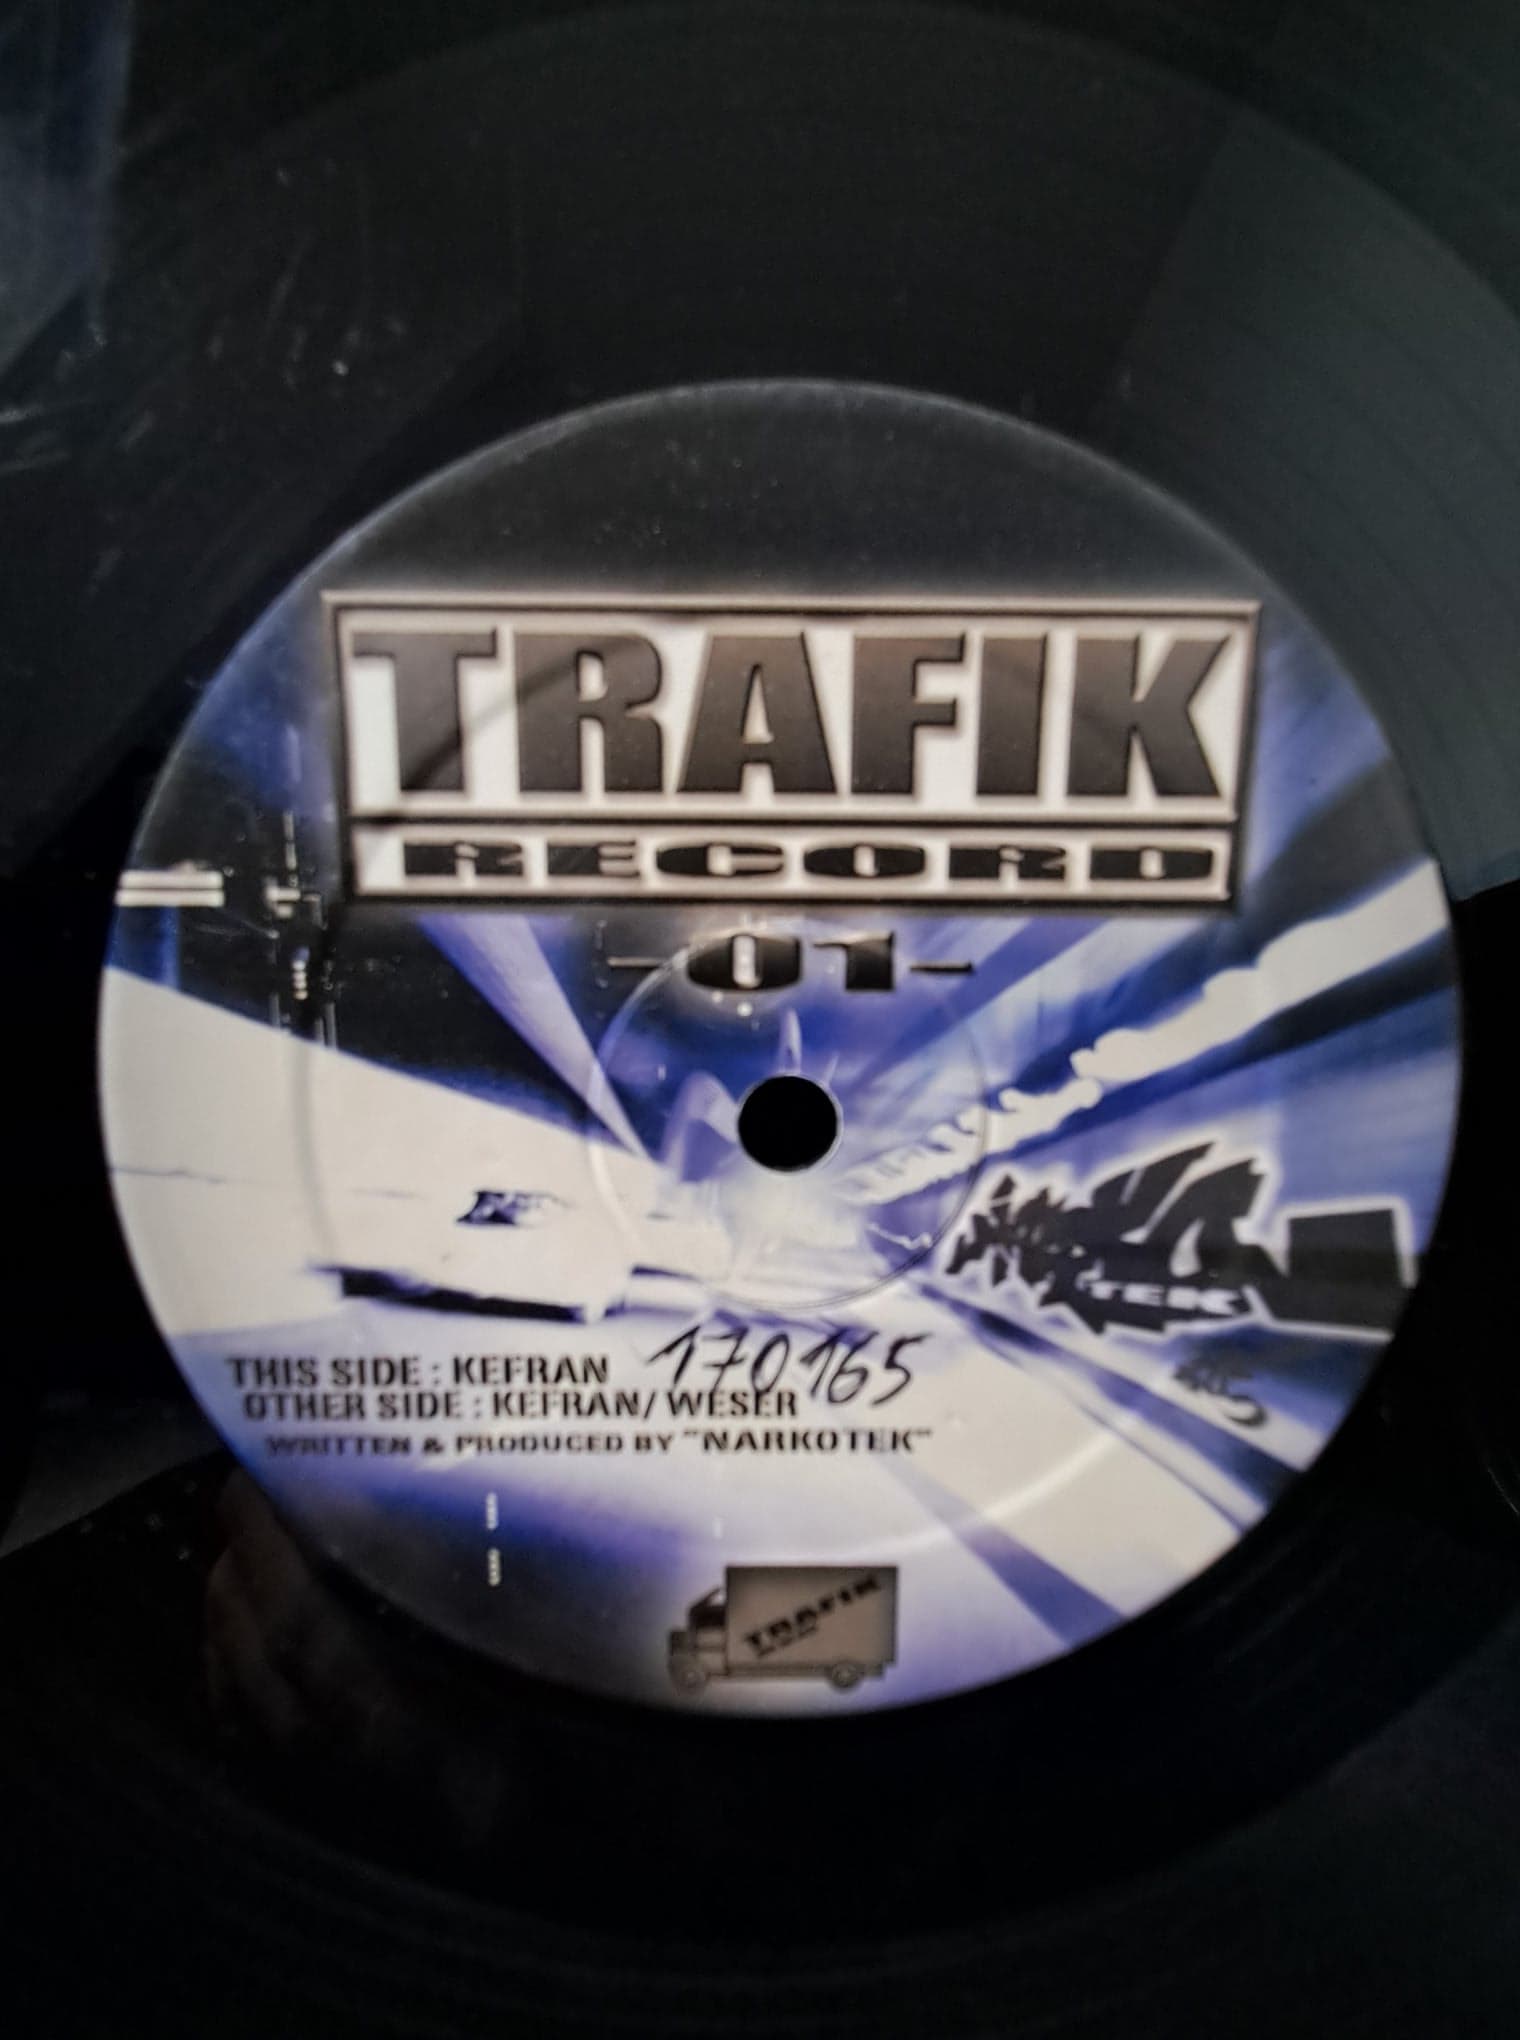 Trafik 001 - vinyle freetekno